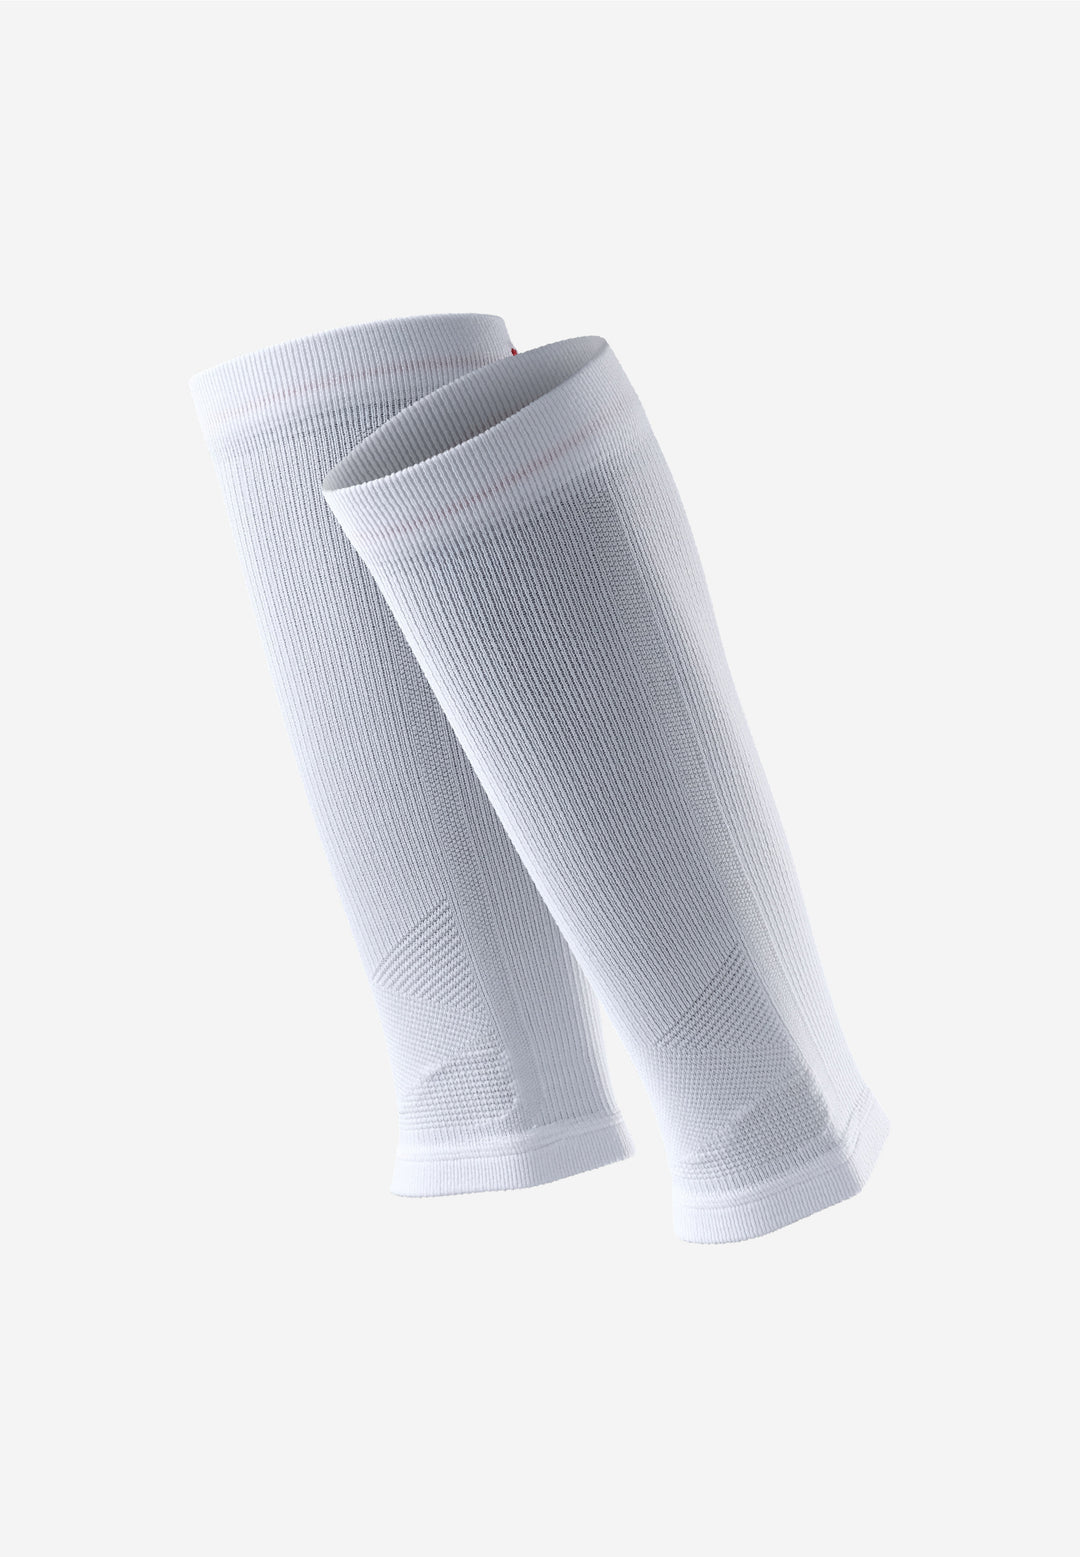 Viking Sport Compression Calf Sleeves (White)